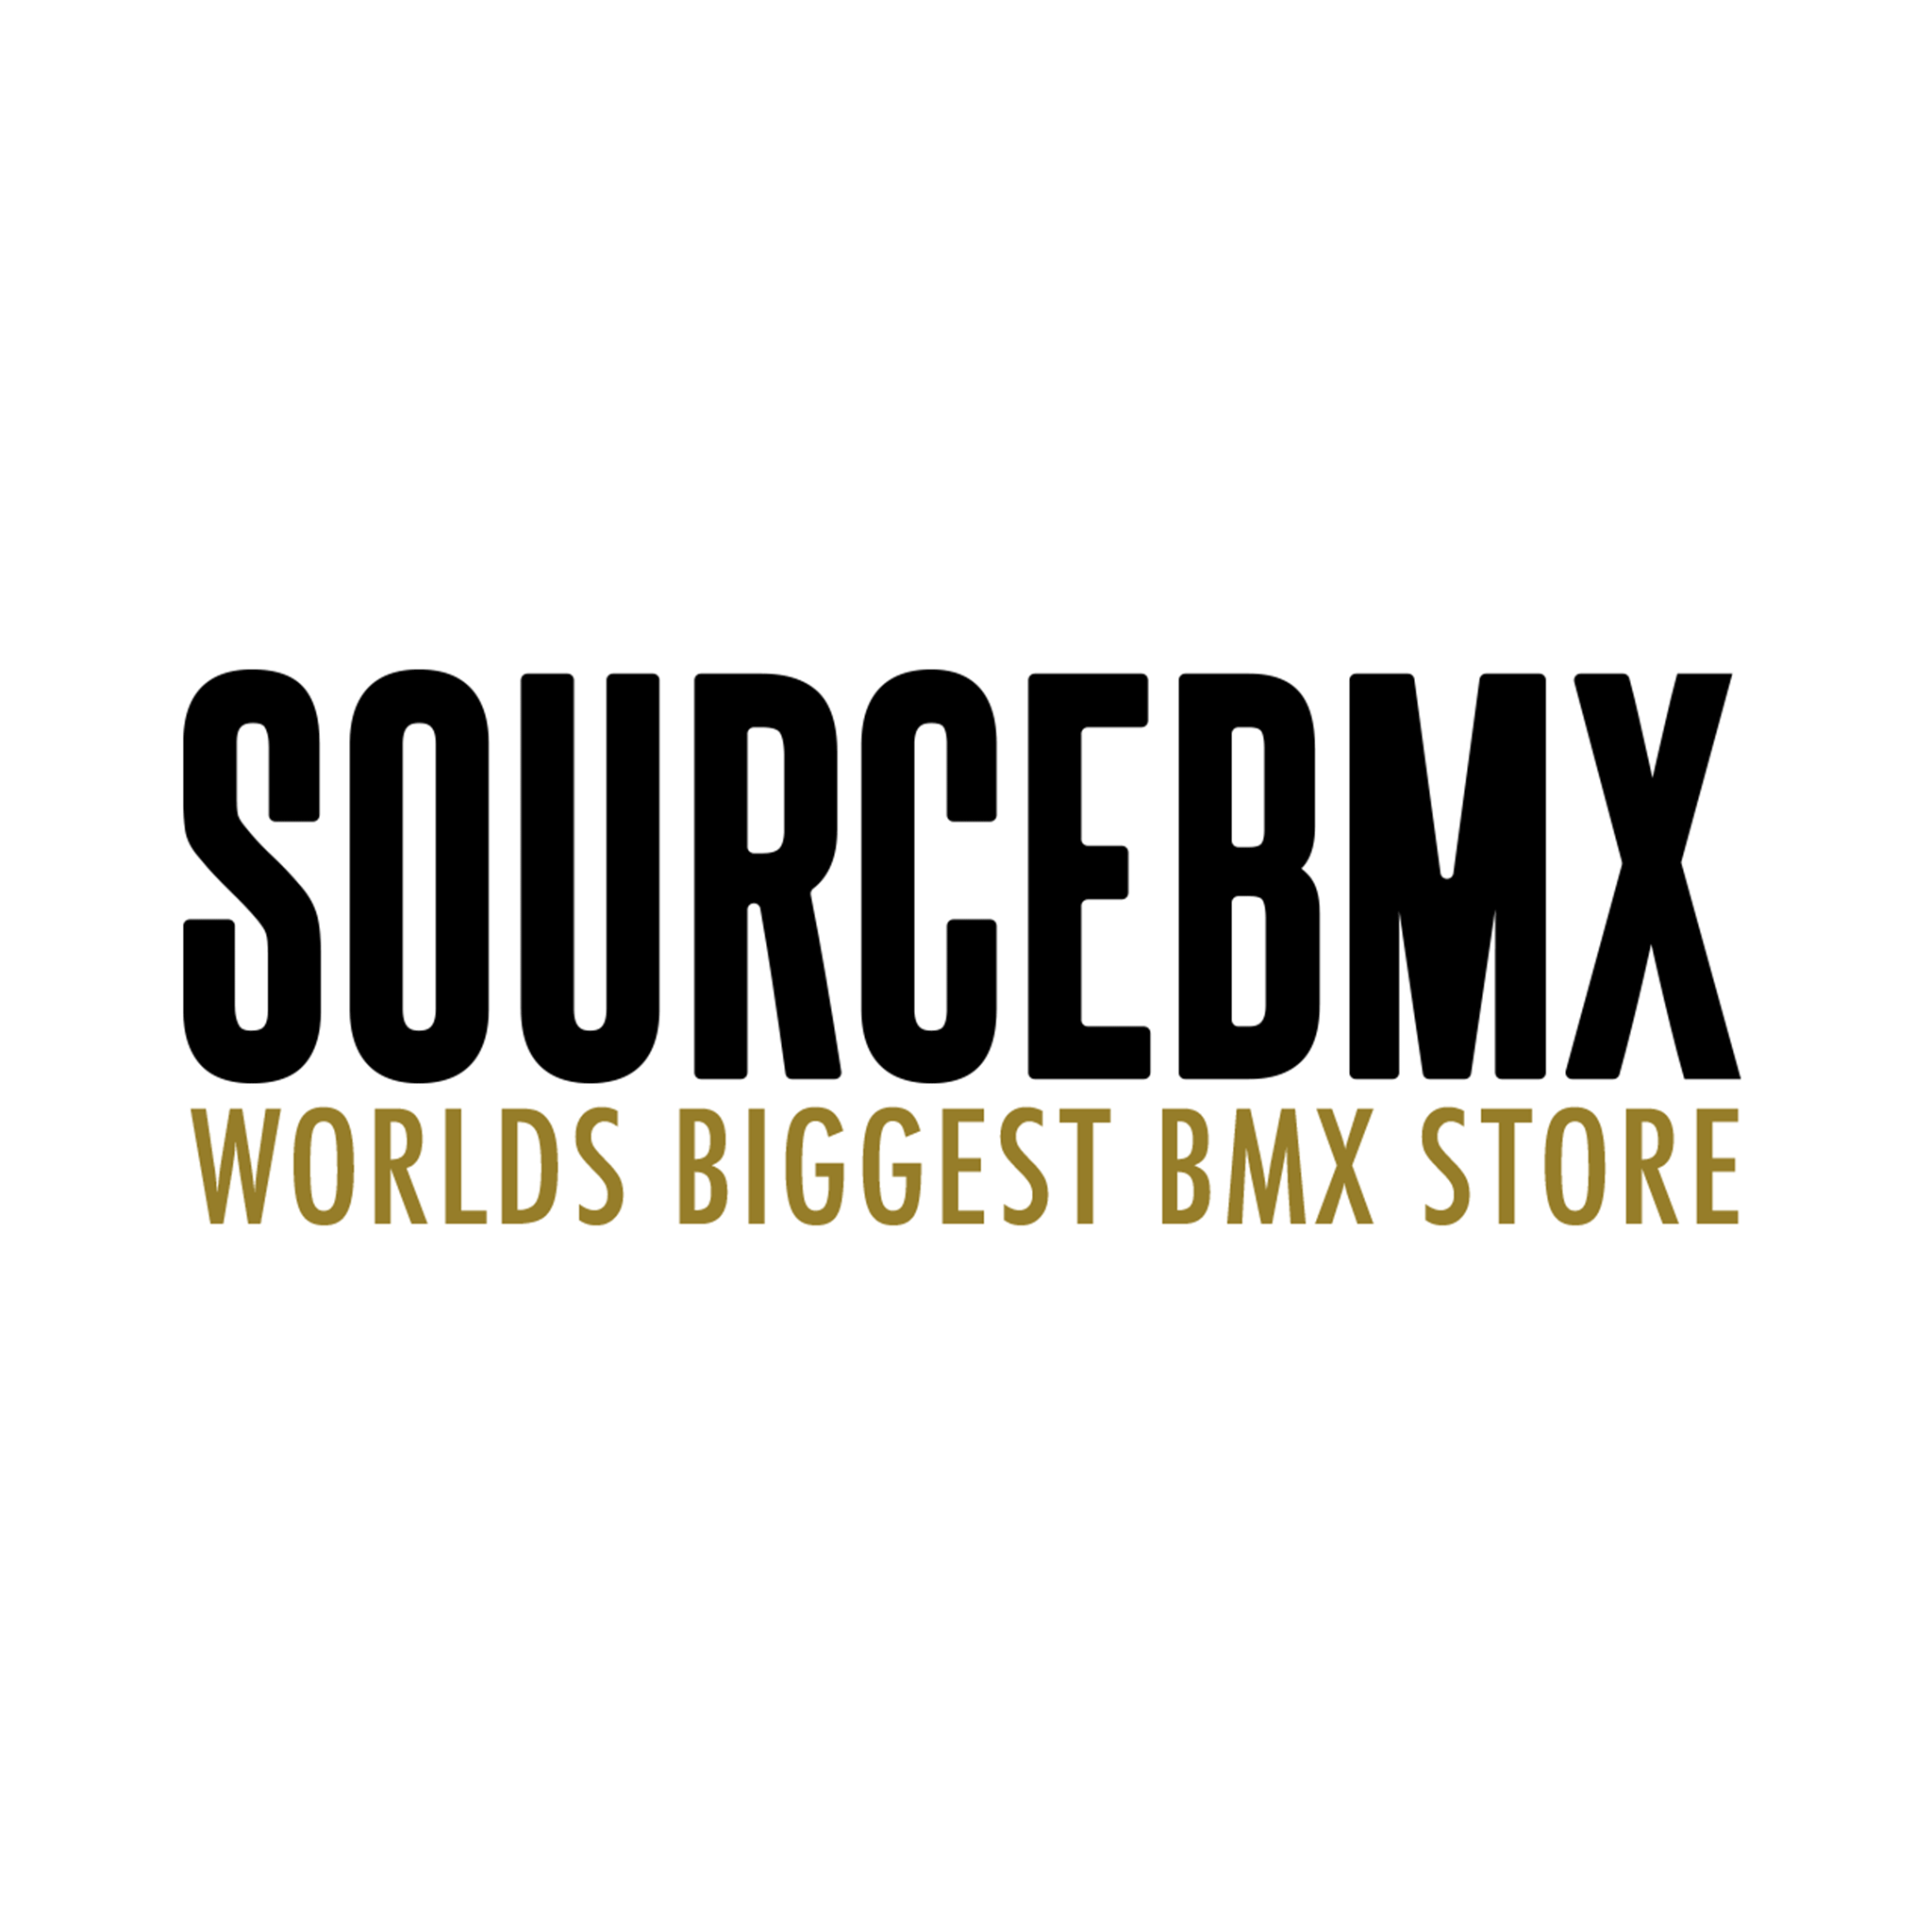 Promo codes SourceBMX